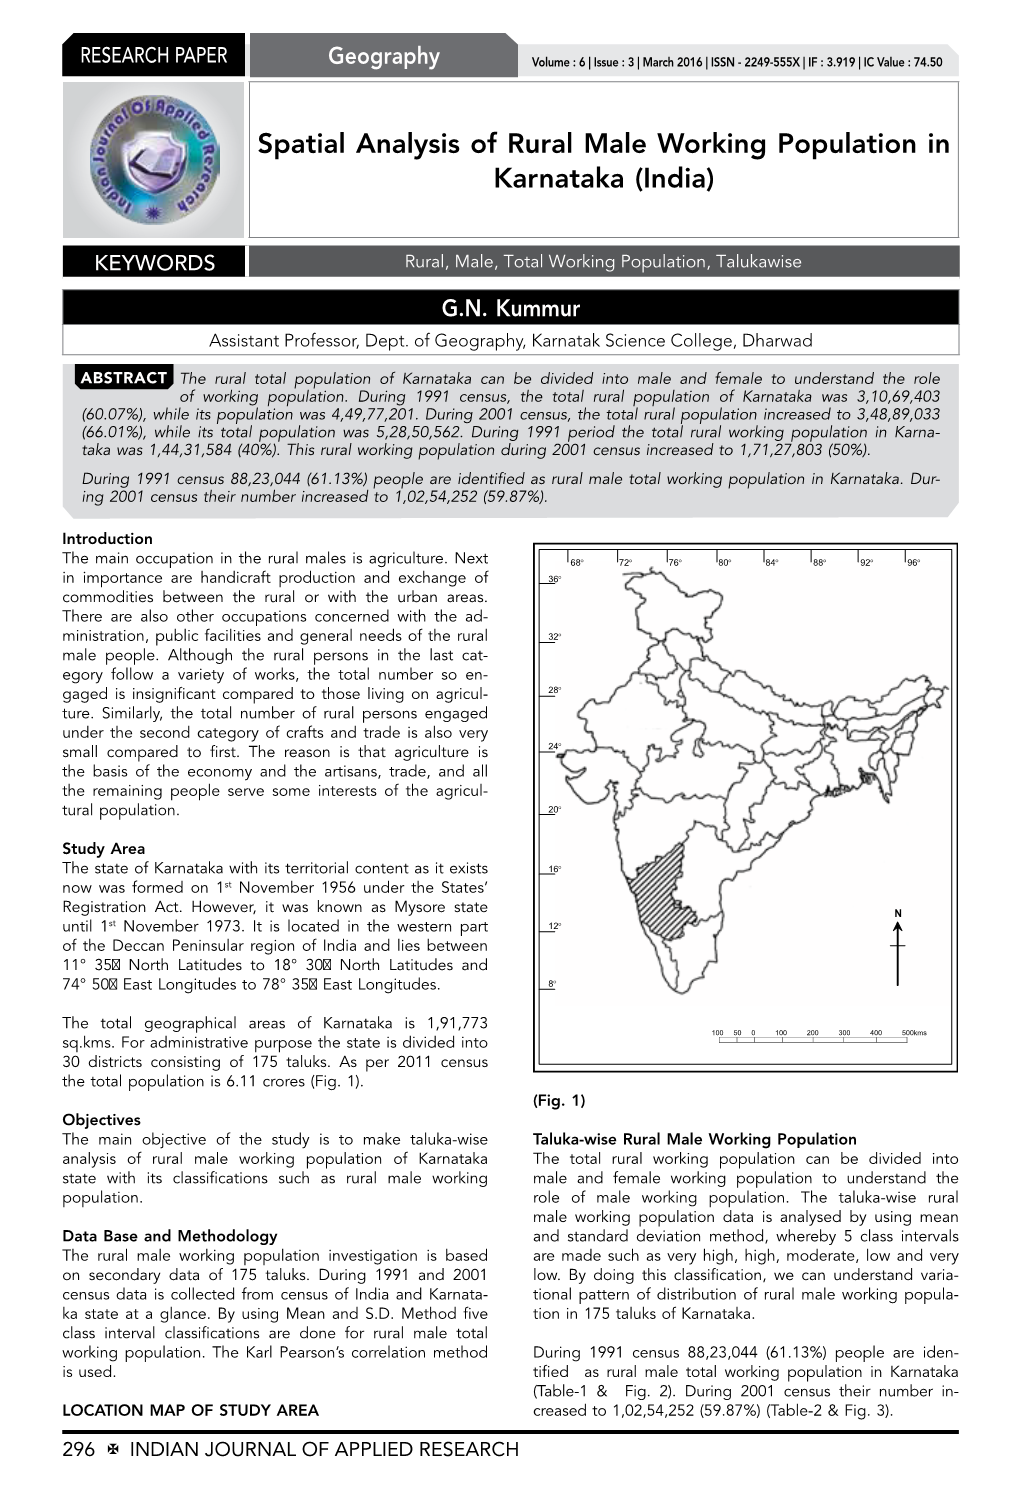 Spatial Analysis of Rural Male Working Population in Karnataka (India)